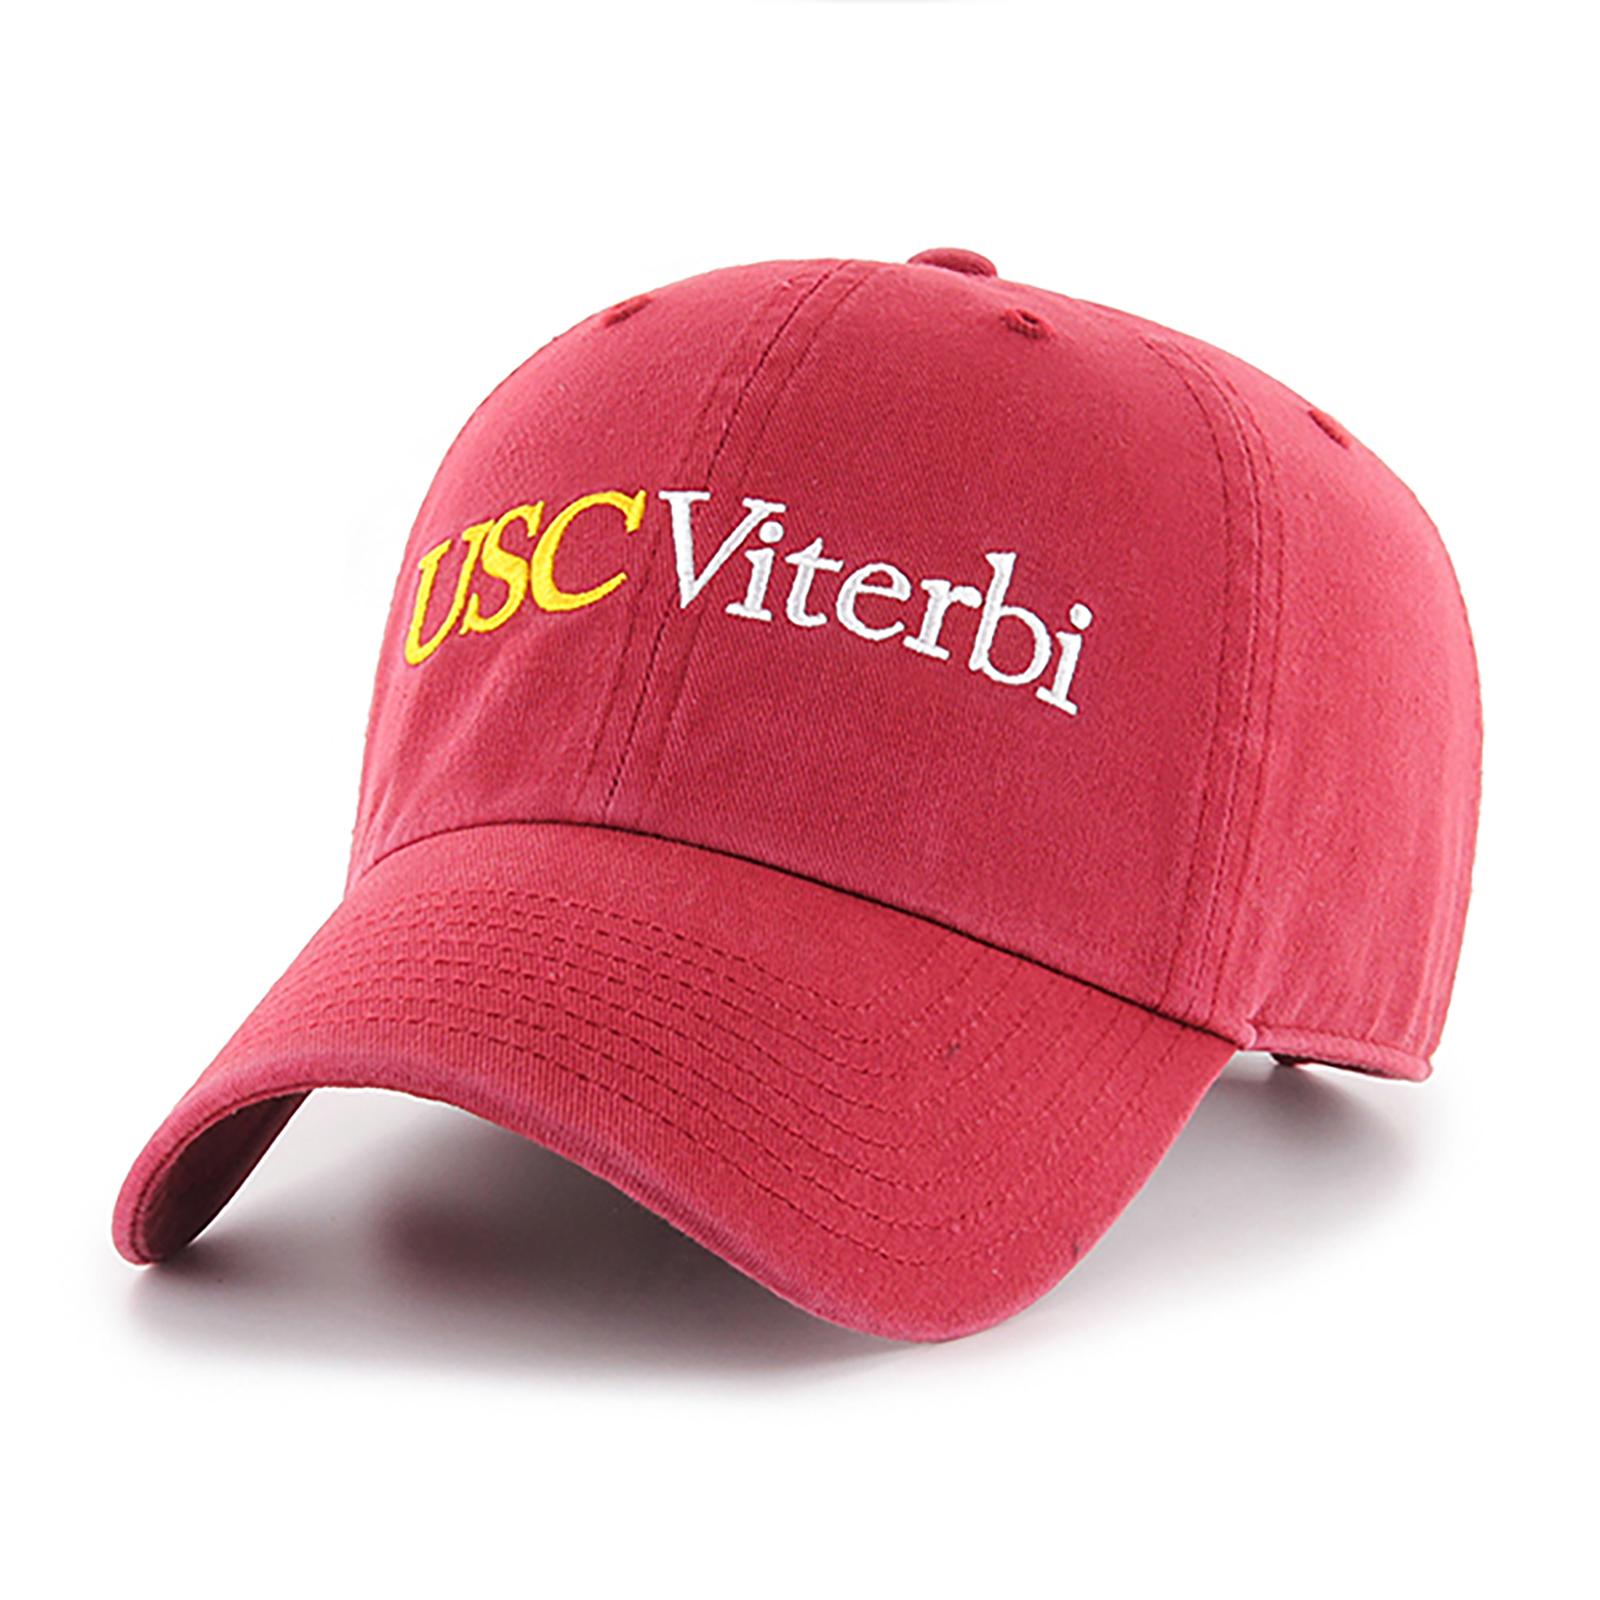 USC School of Viterbi Engineering Cap Cardinal Fits All image01